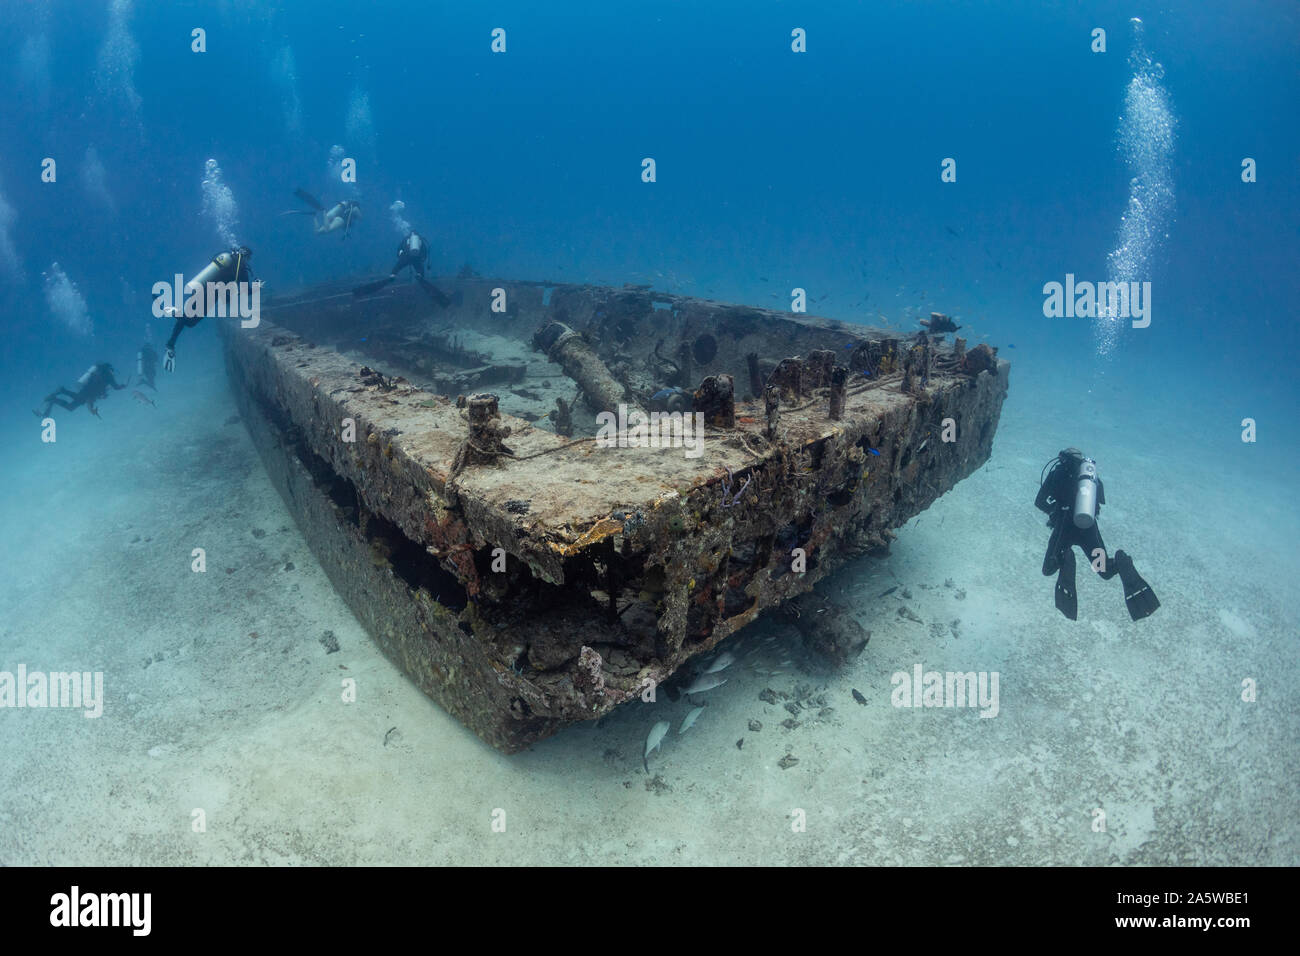 Several scuba divers swim around a shipwreck off the coast of Bimini, Bahamas. Stock Photo